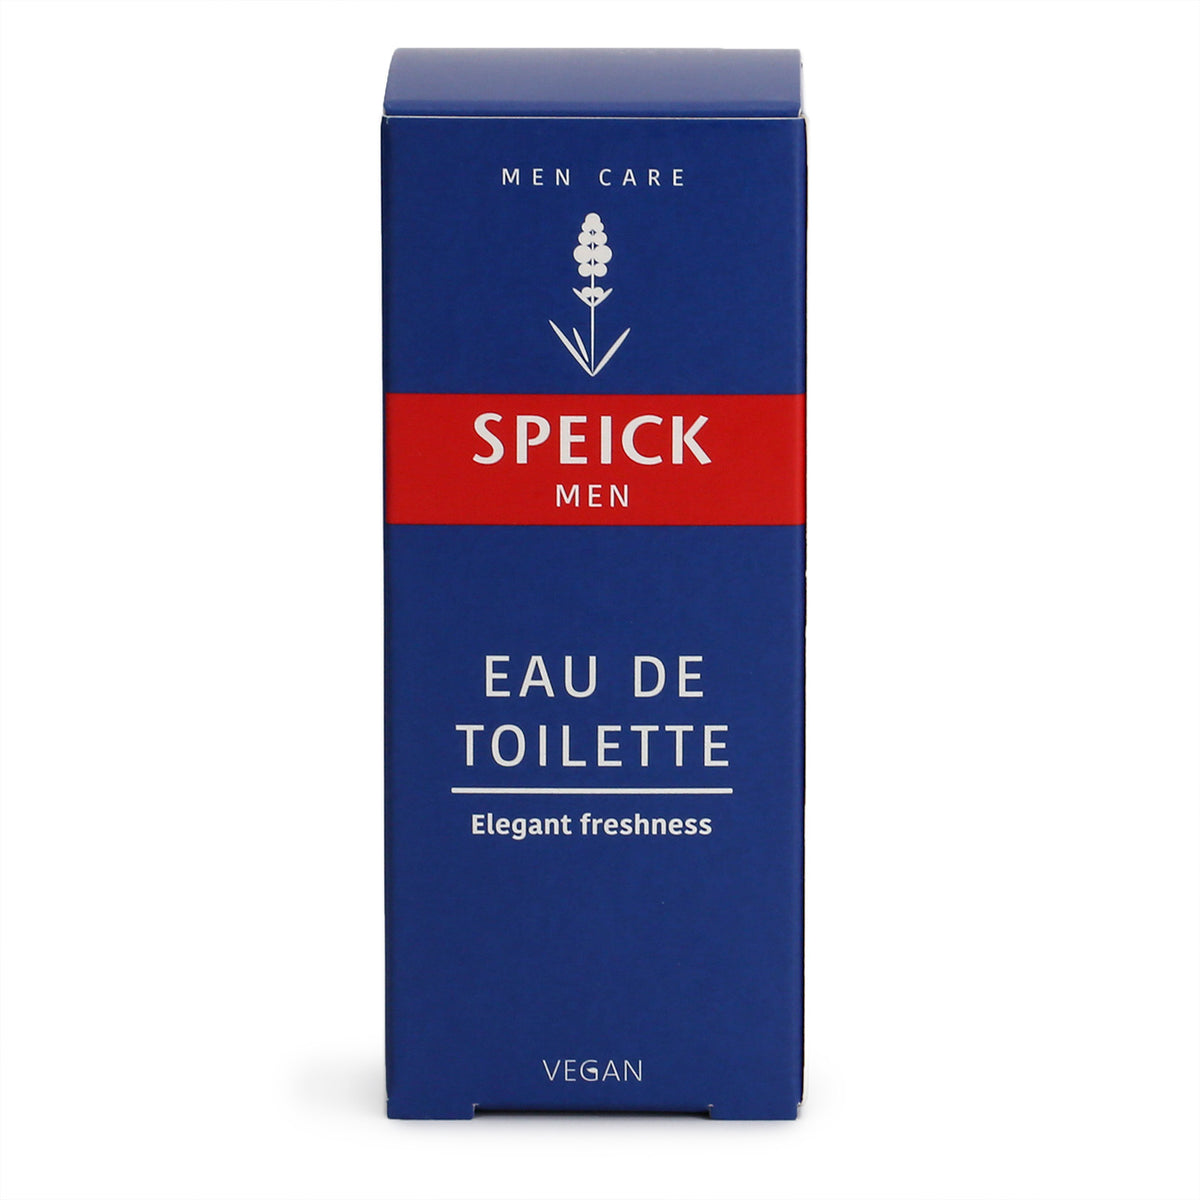 Speick Men Eau de Toilette Elegant Freshness blue red and white outer box